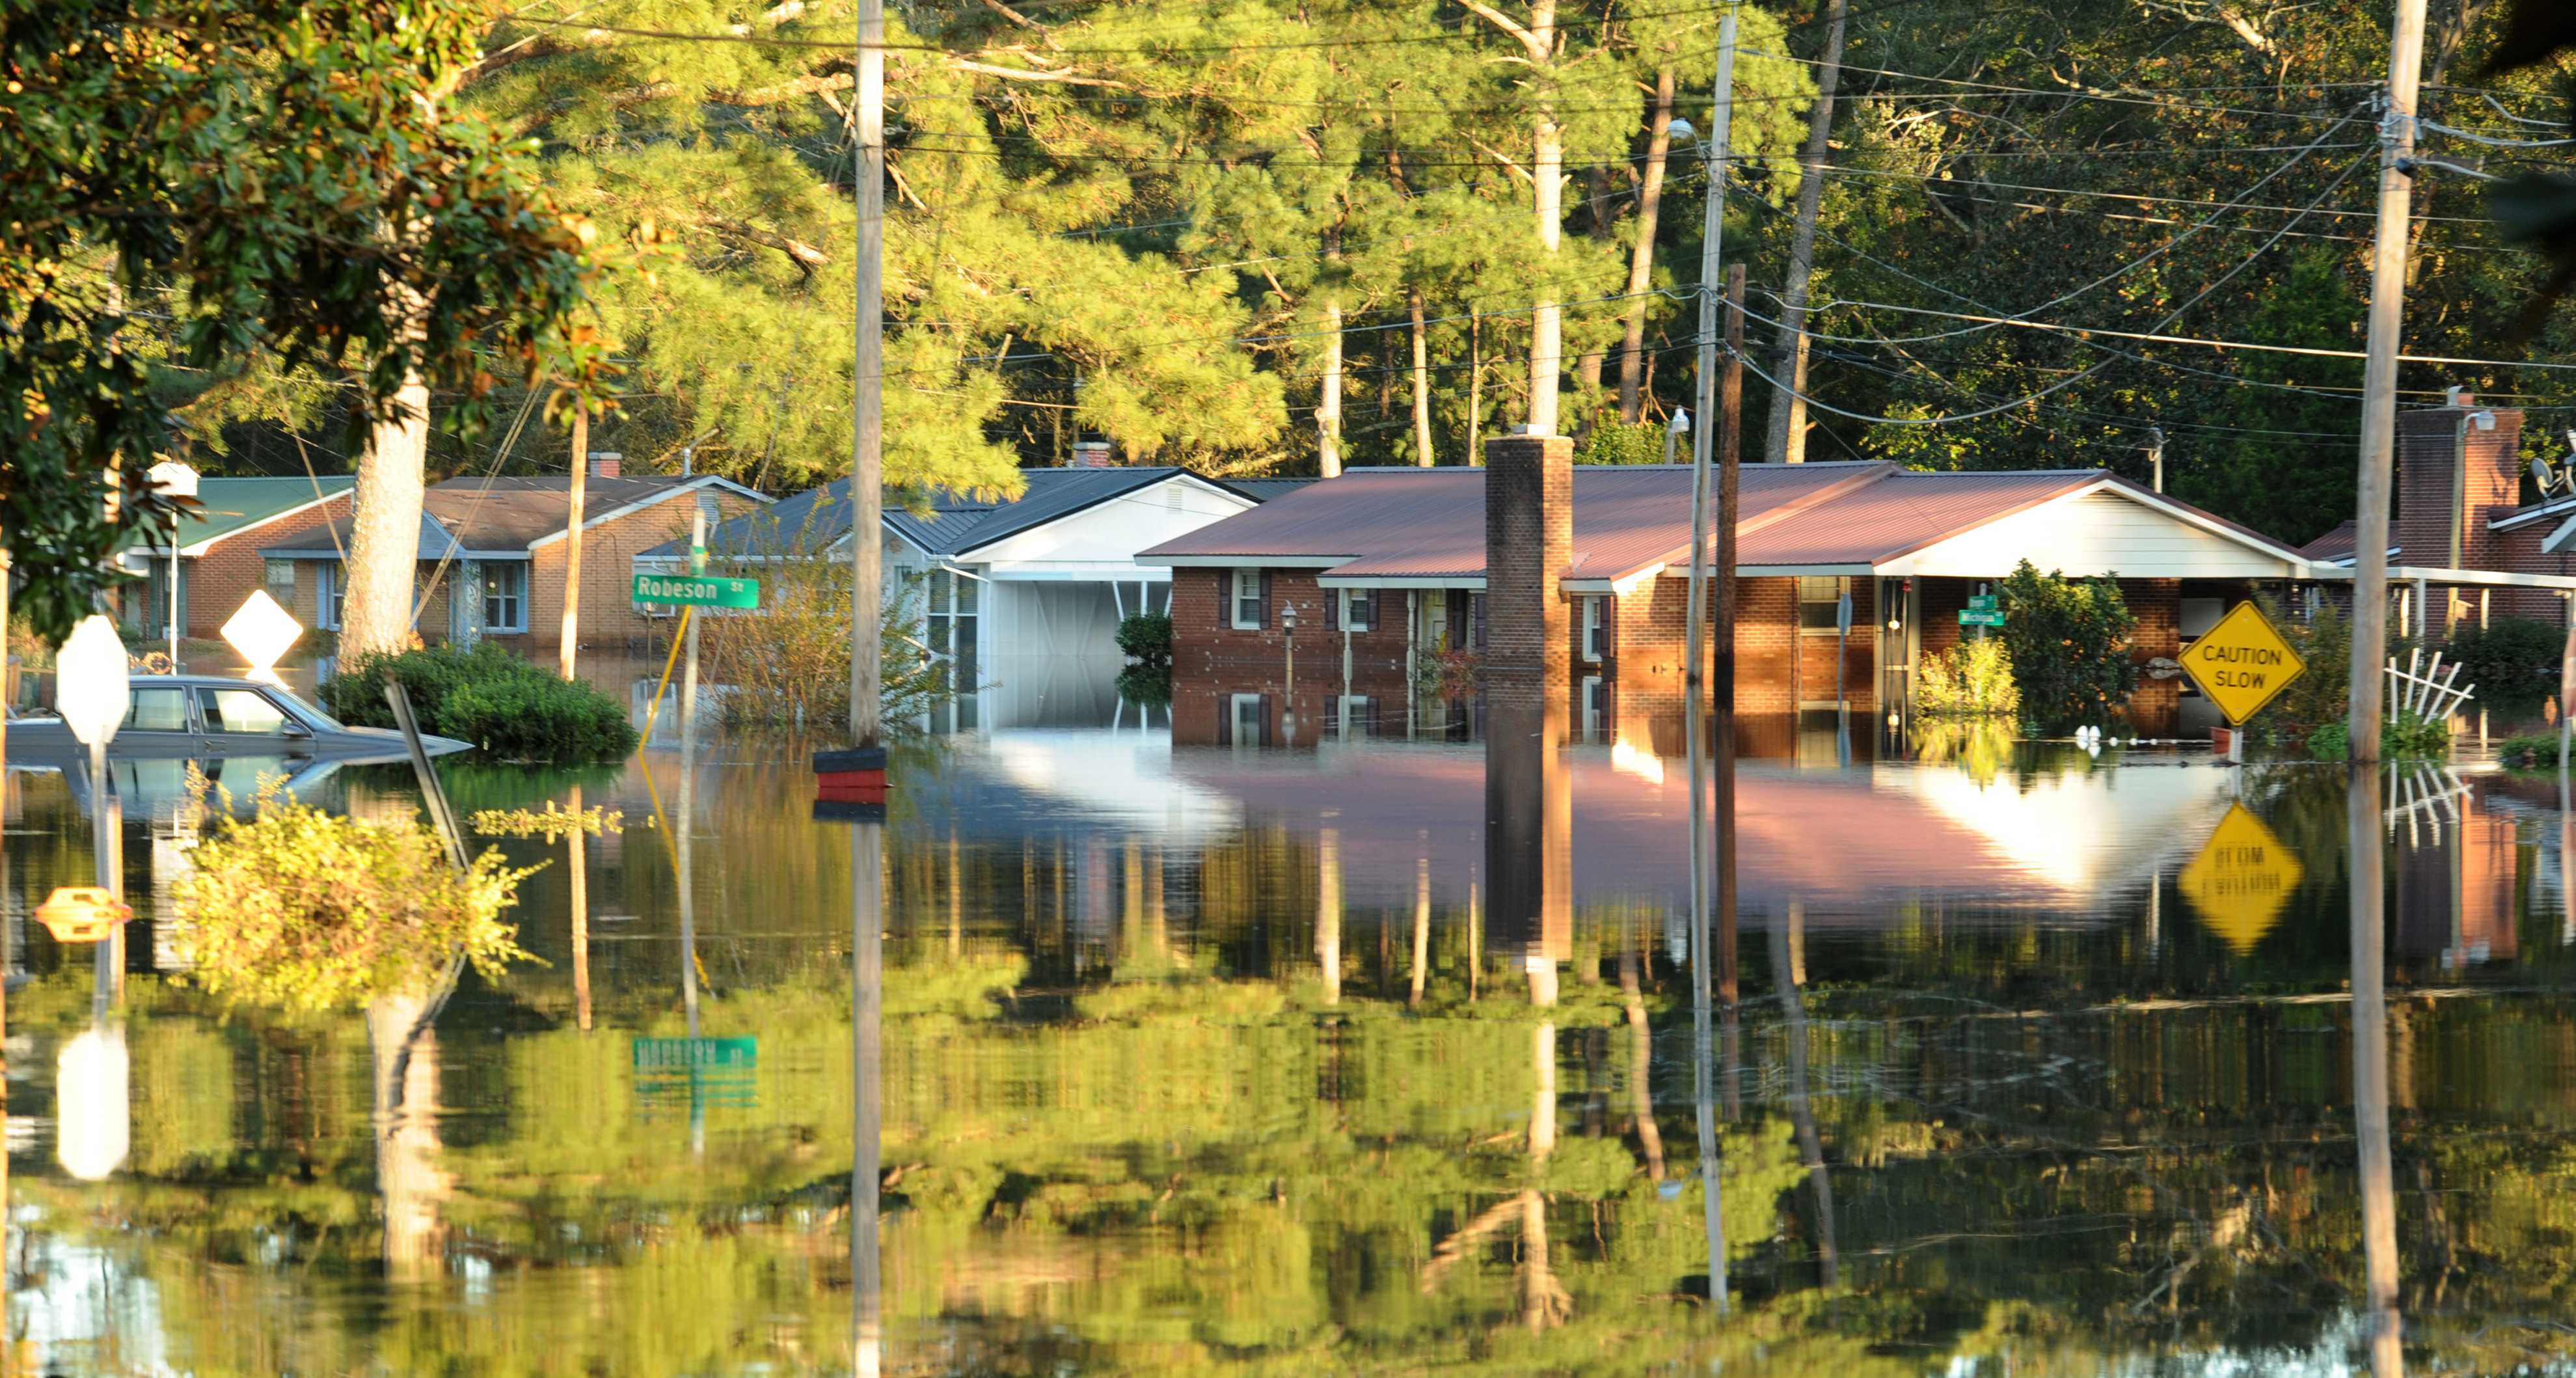 Post-Matthew flooding in Robeson County, North Carolina. Photo by Jocelyn Augustino/FEMA.